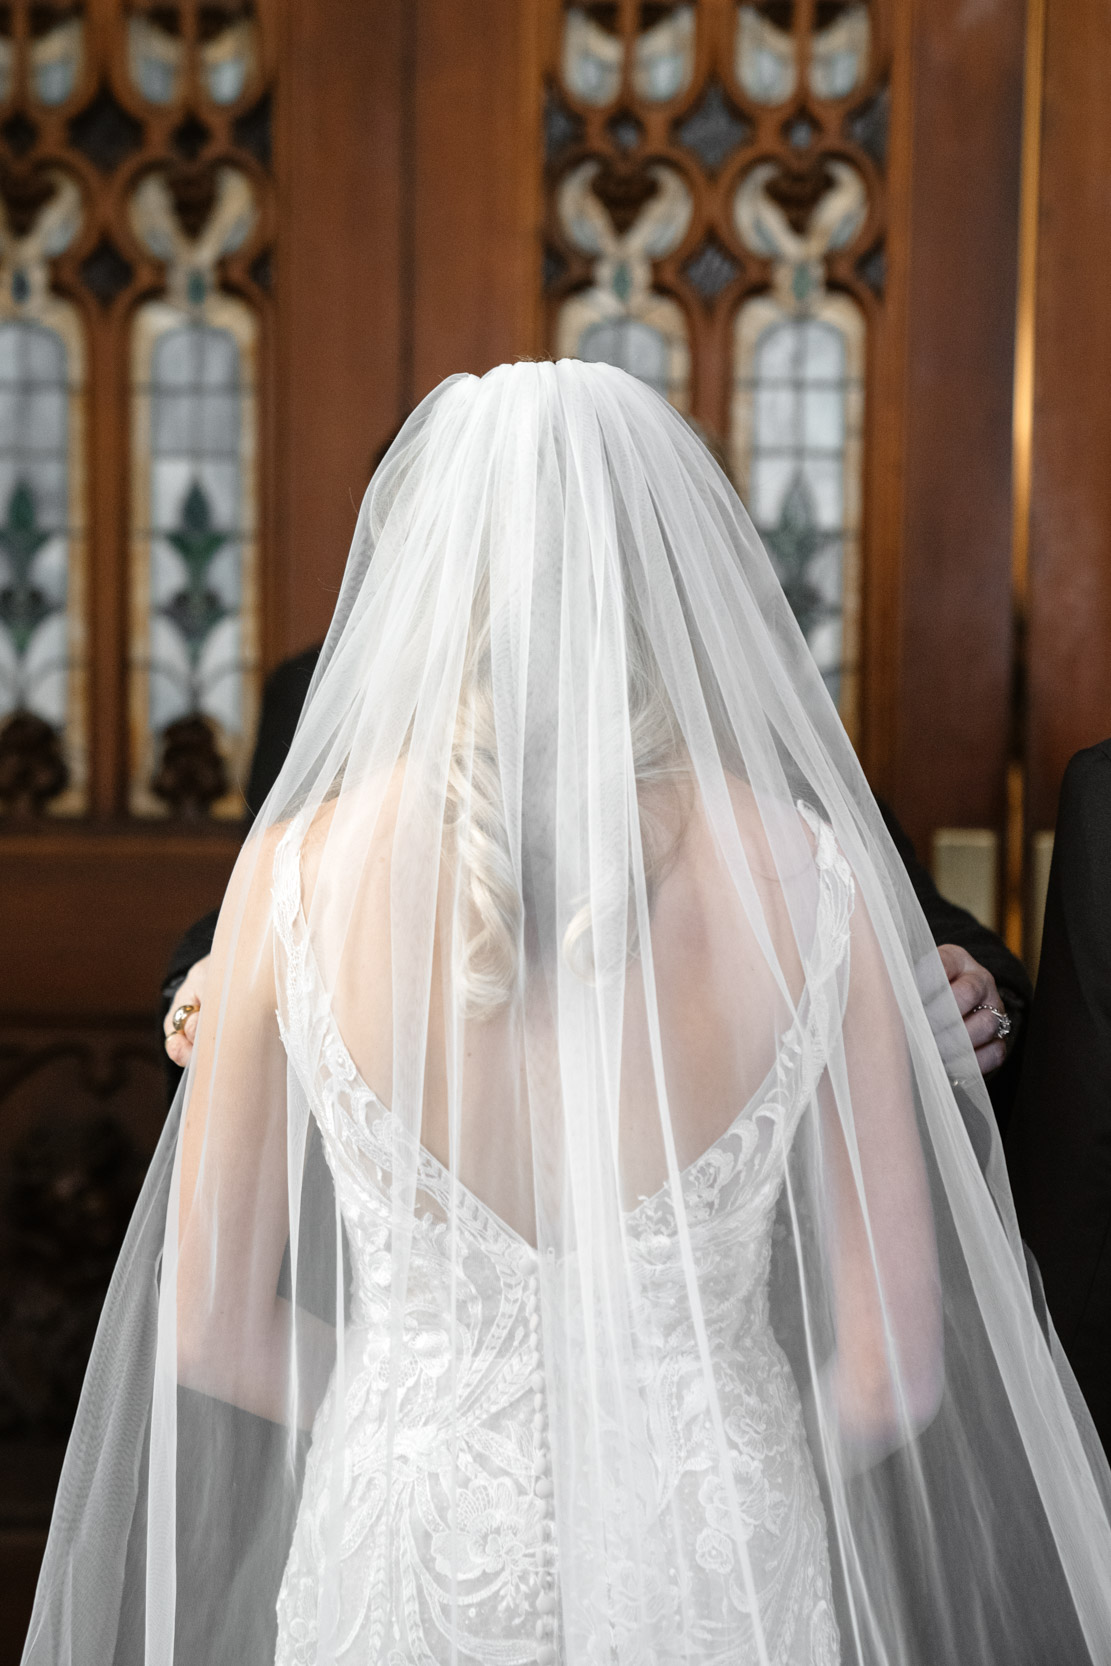 bride adjusting veil before wedding ceremony at St. Patricks cathedral in New Orleans